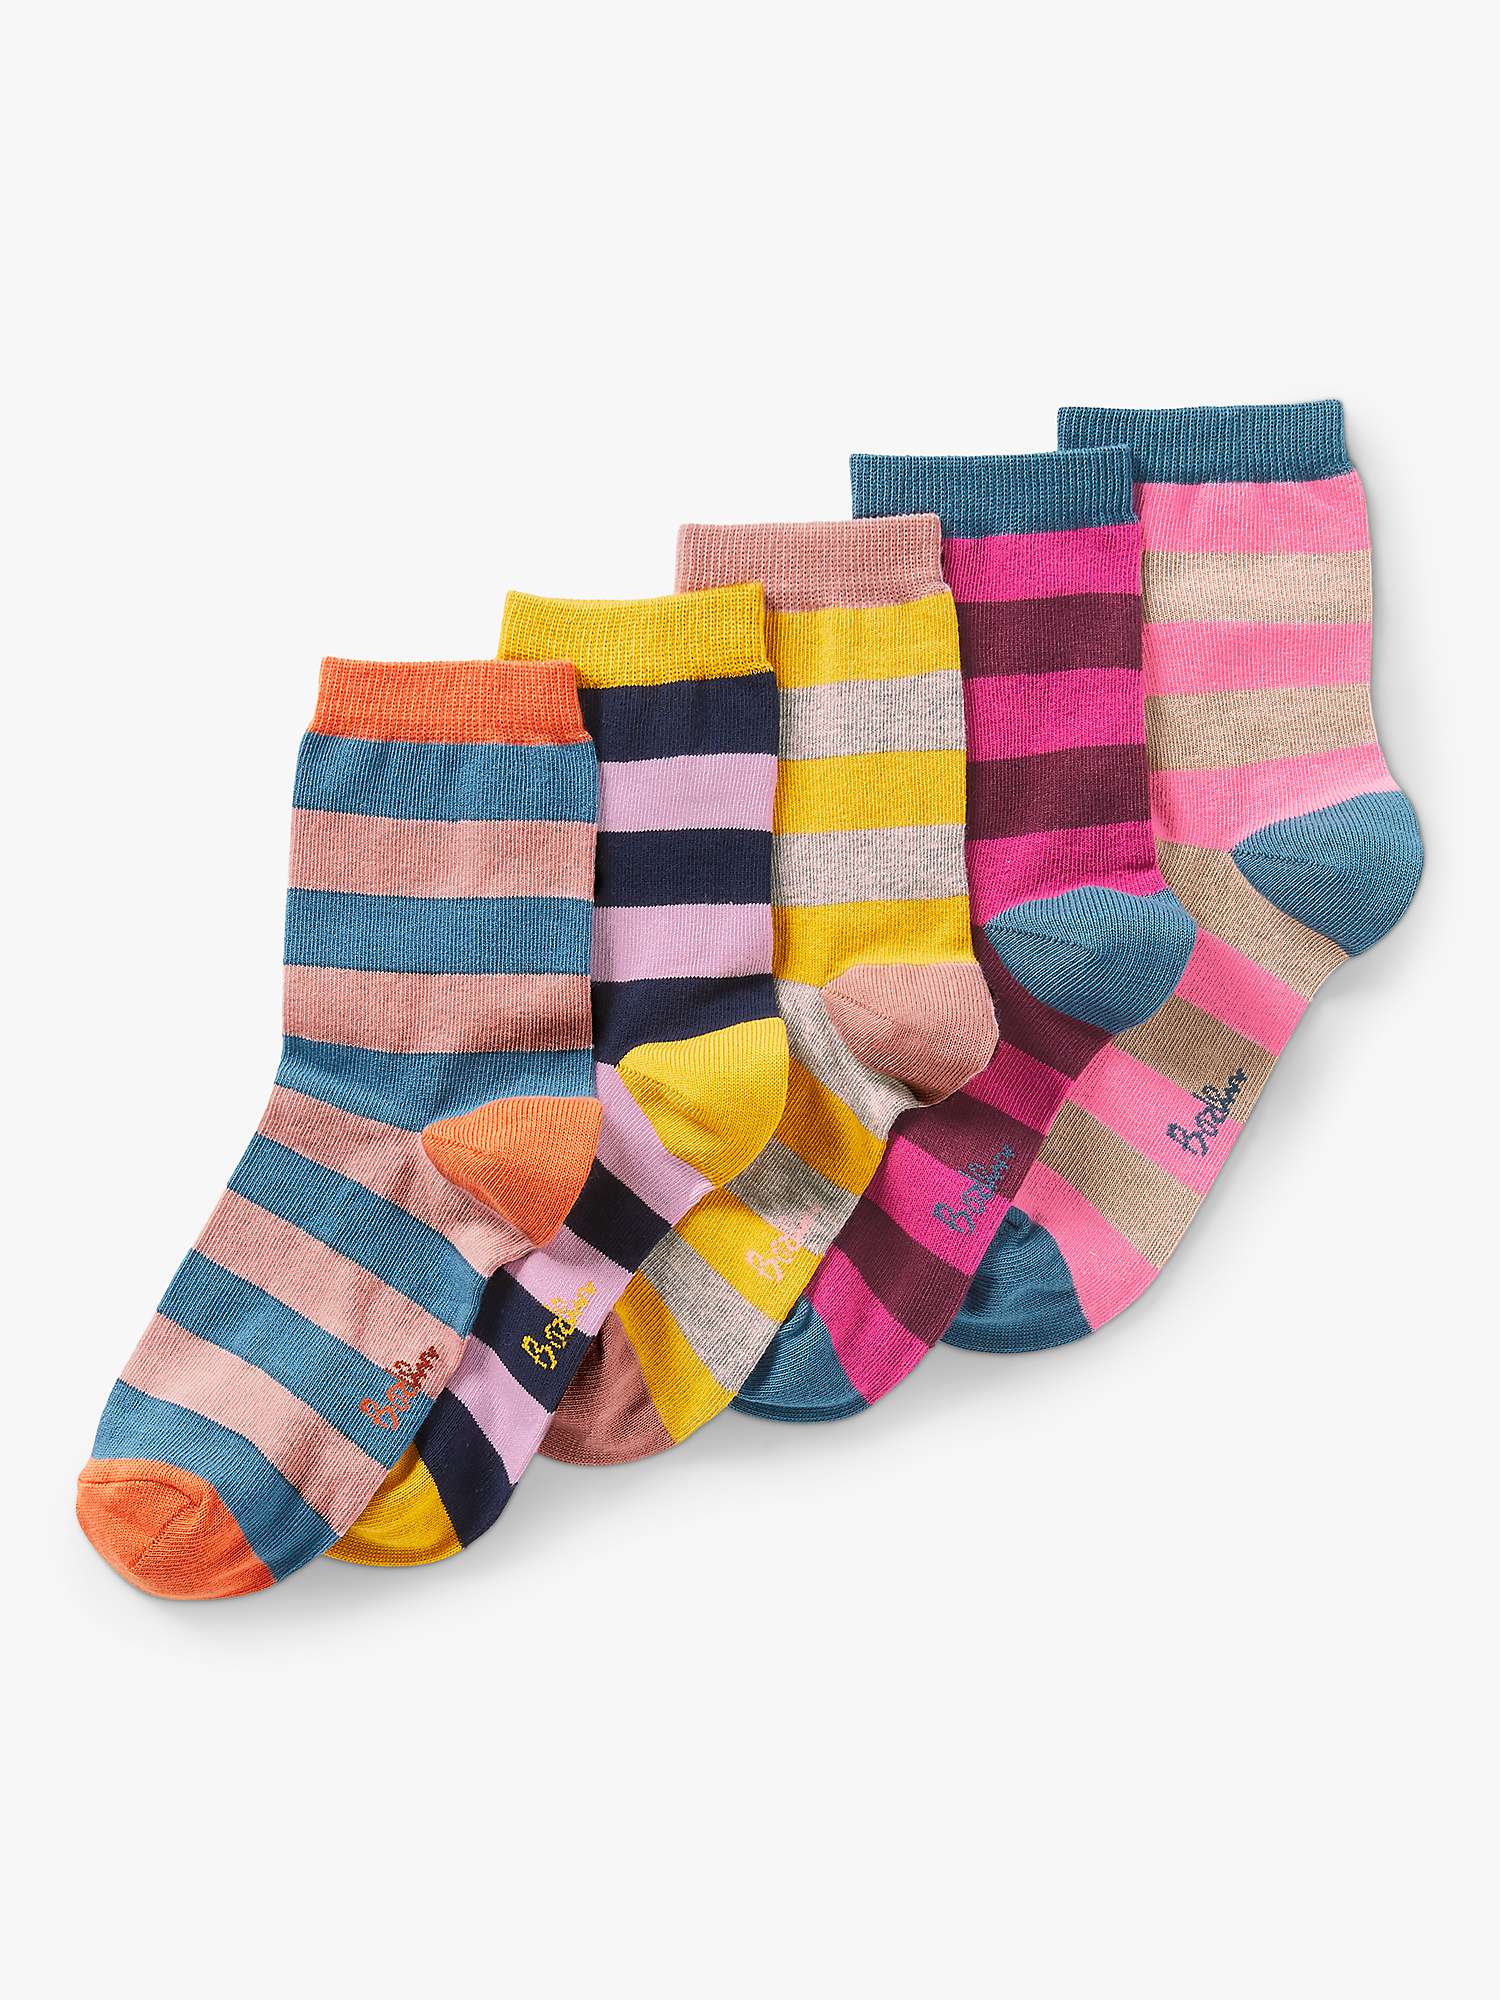 Buy Boden Women's Striped Ankle Socks, Pack of 5, Multi Online at johnlewis.com